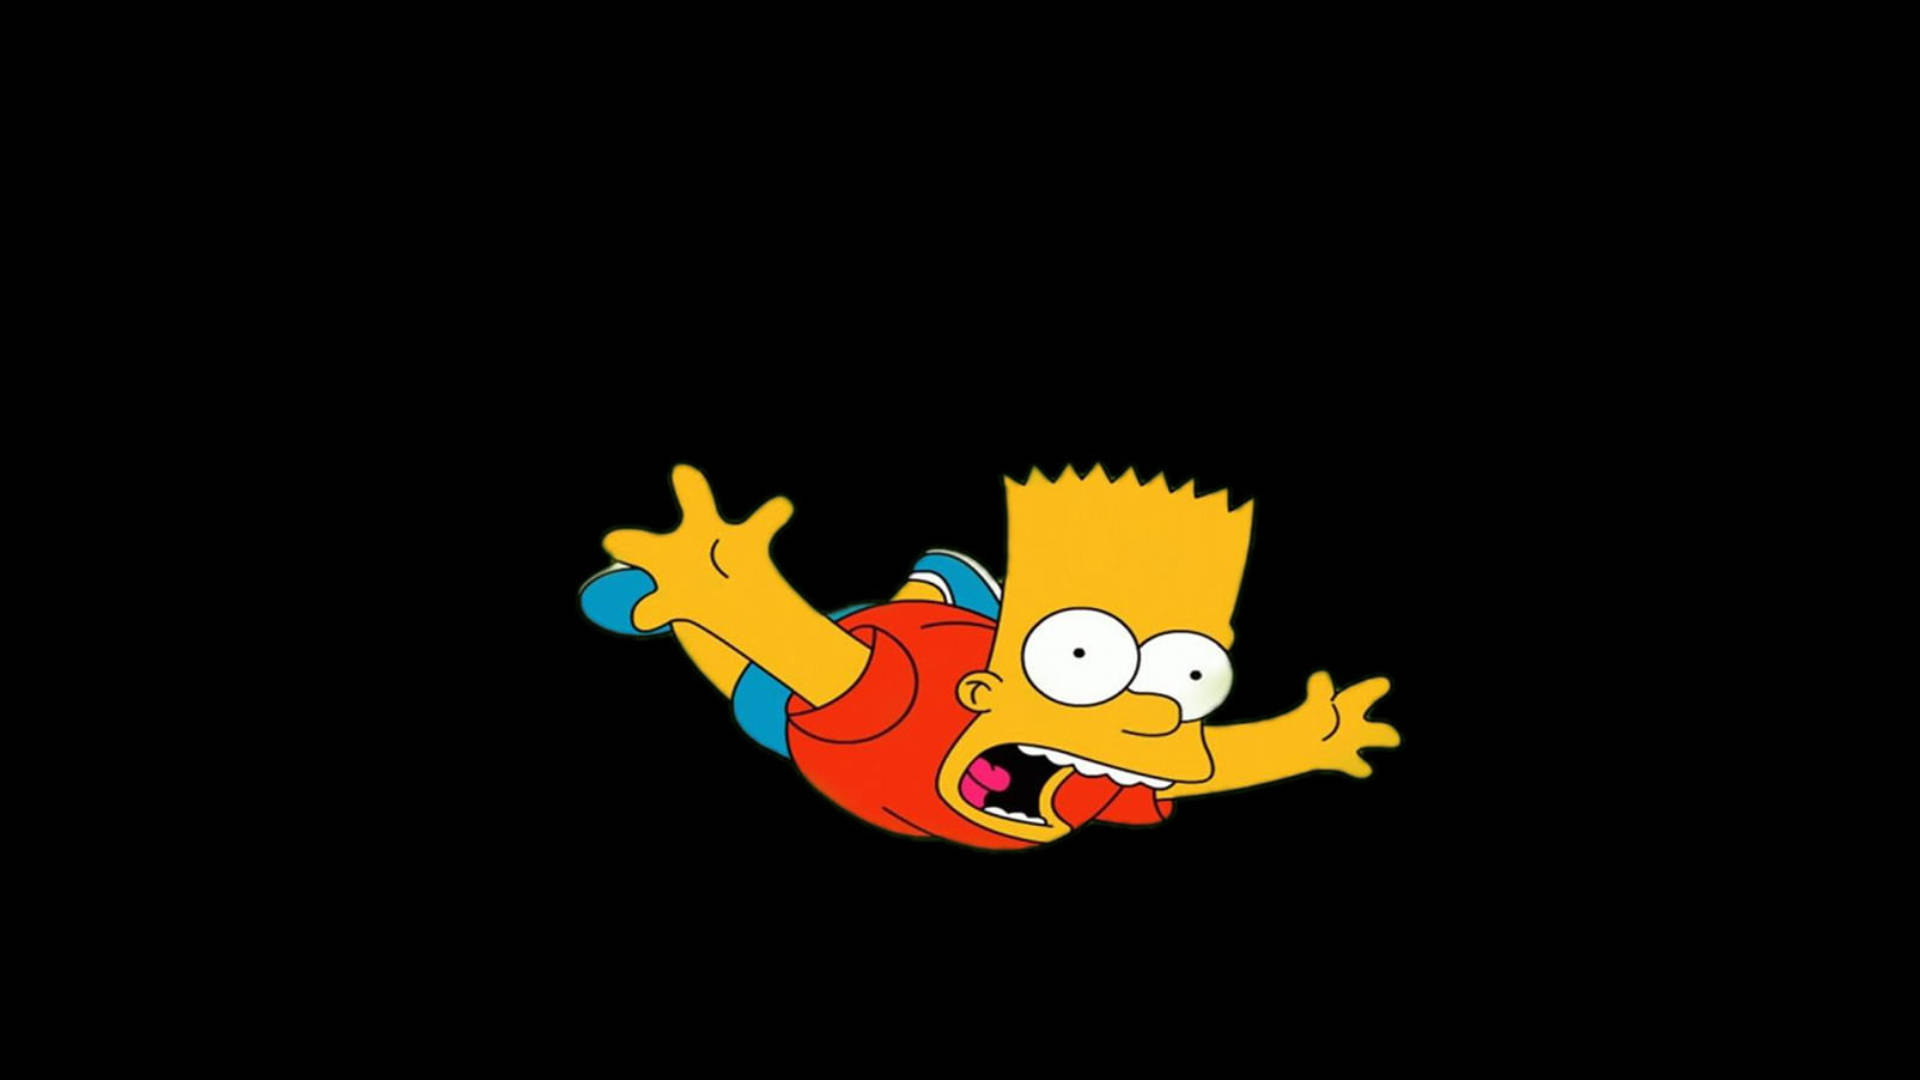 Download Falling Bart Simpson On Black Background Wallpaper ...